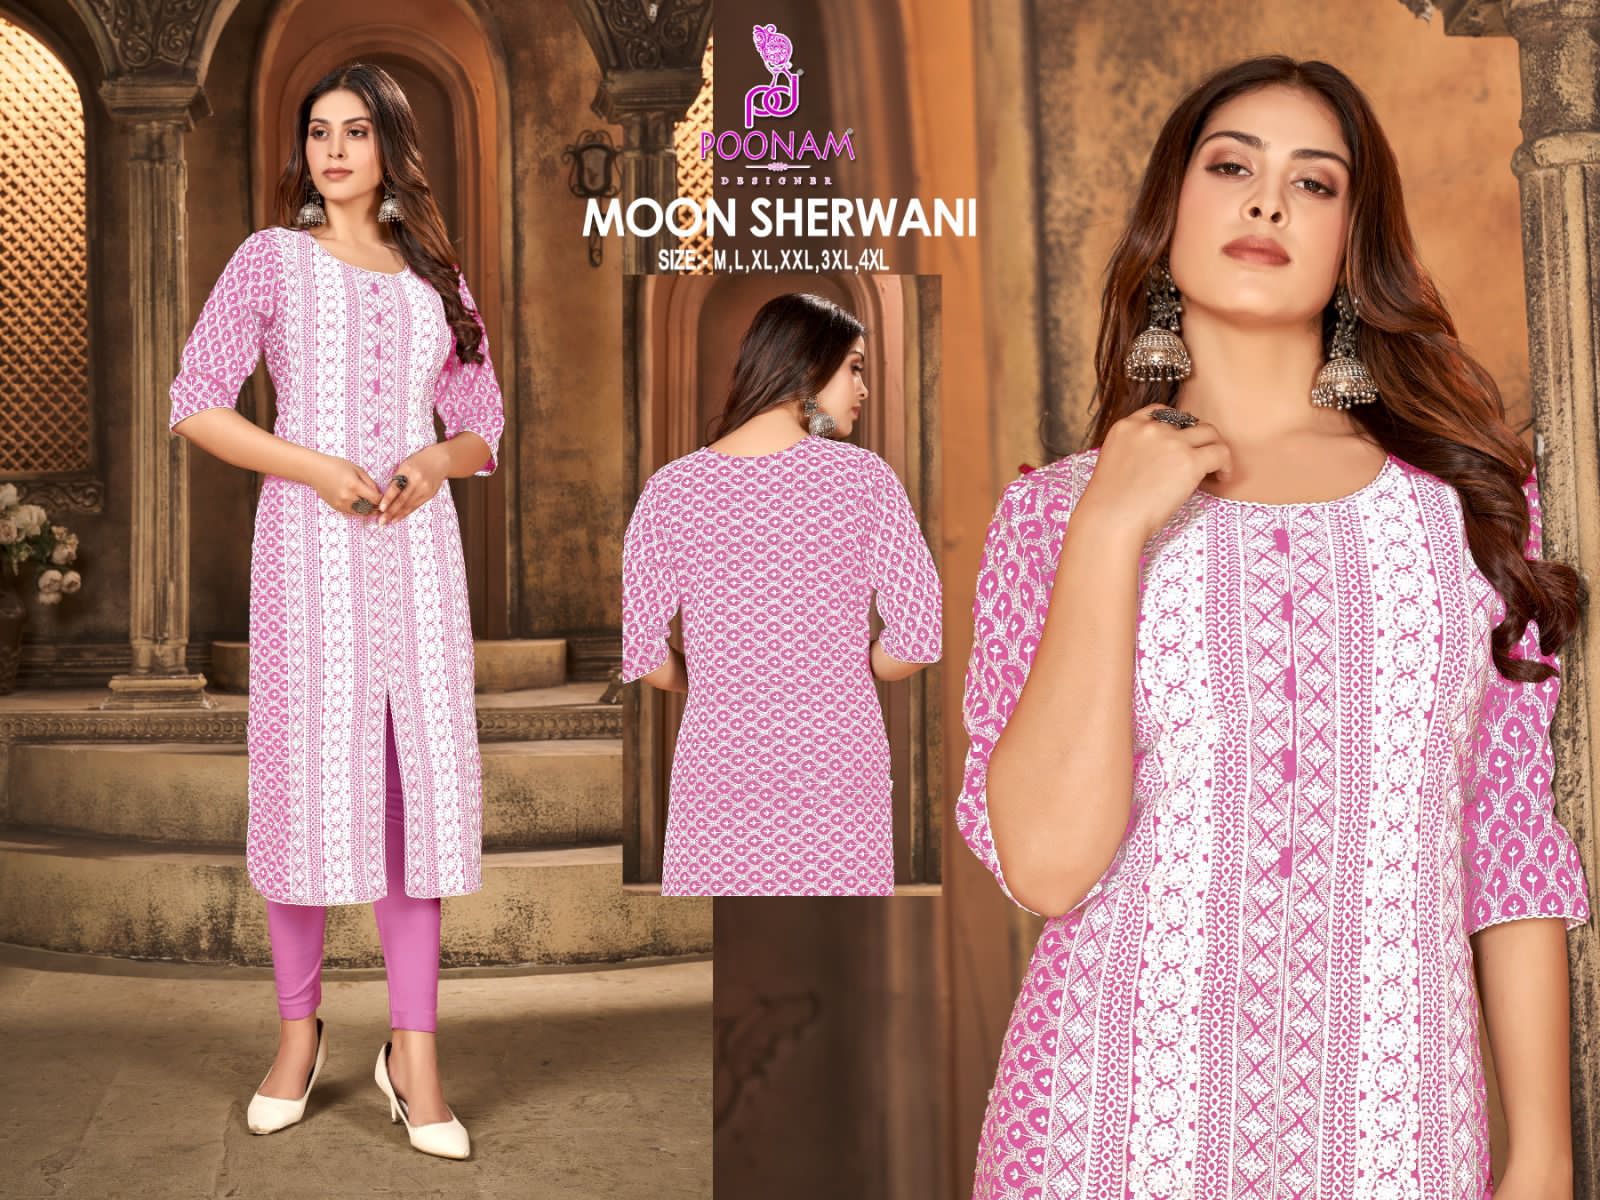 Poonam Moon Sherwani collection 4